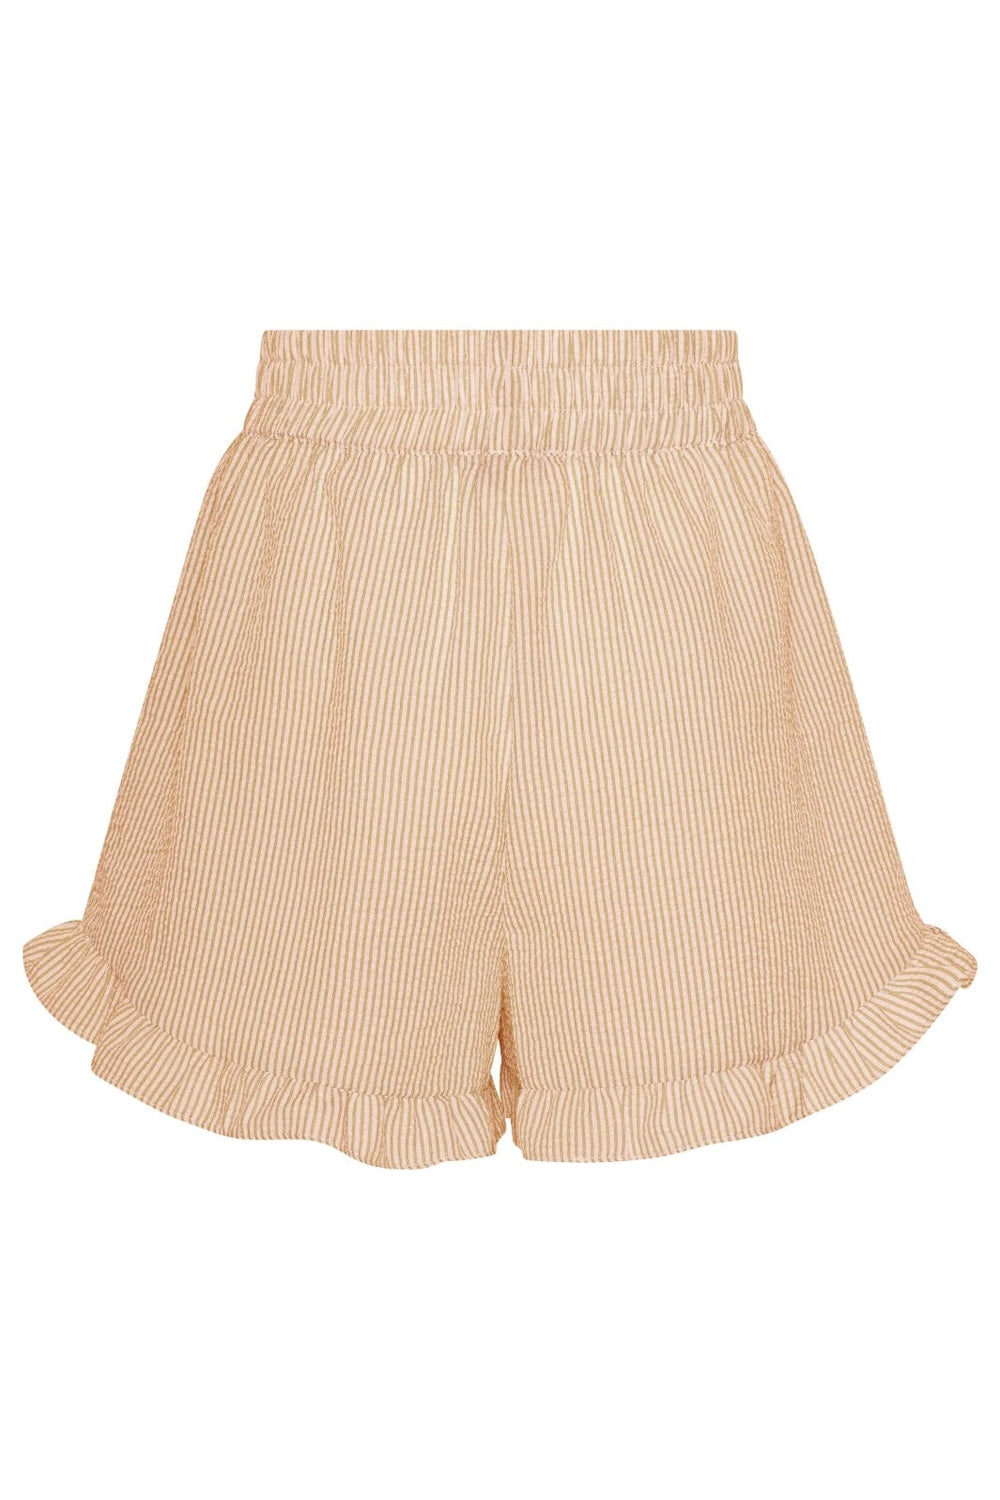 A-View - Sonja Shorts - 867 Orange/White Shorts 